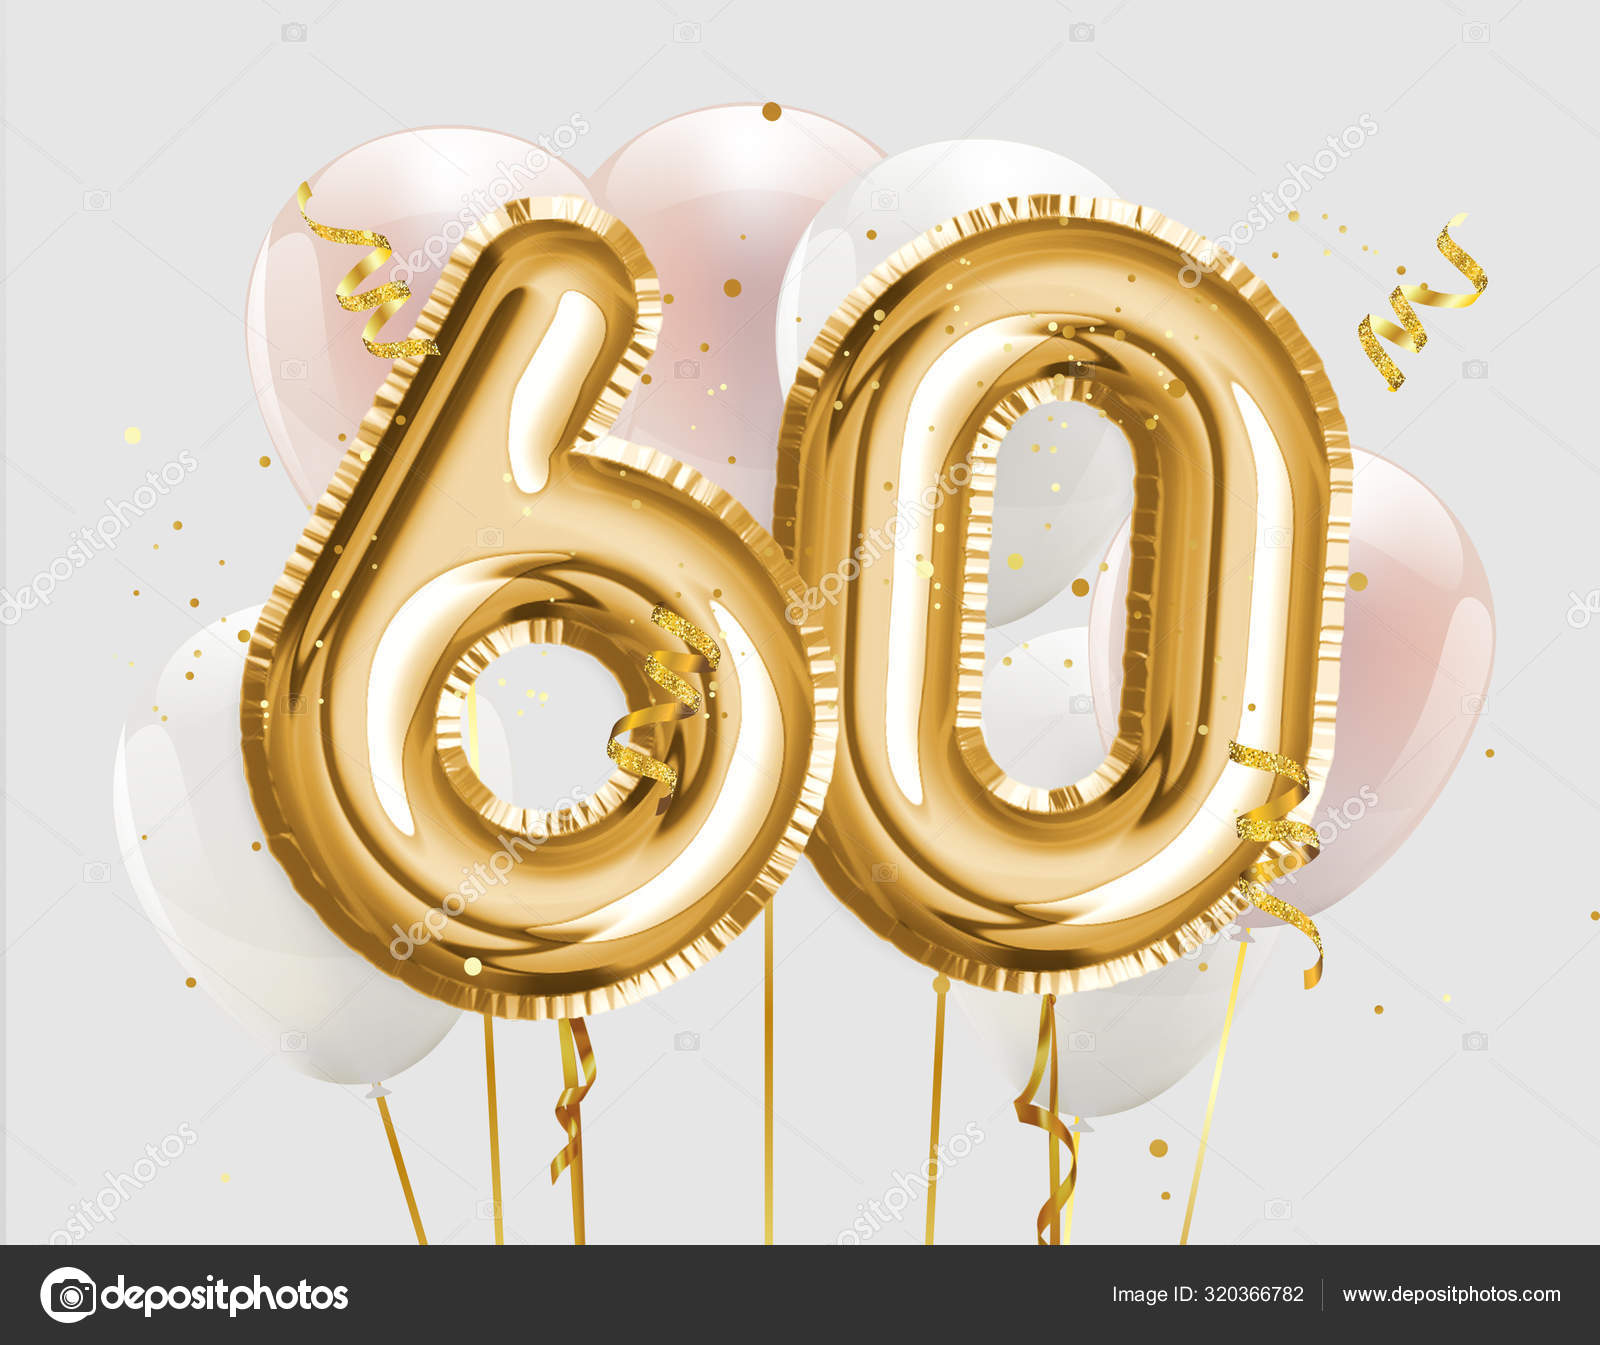 Ballon anniversaire jaune gold - 60 ans 